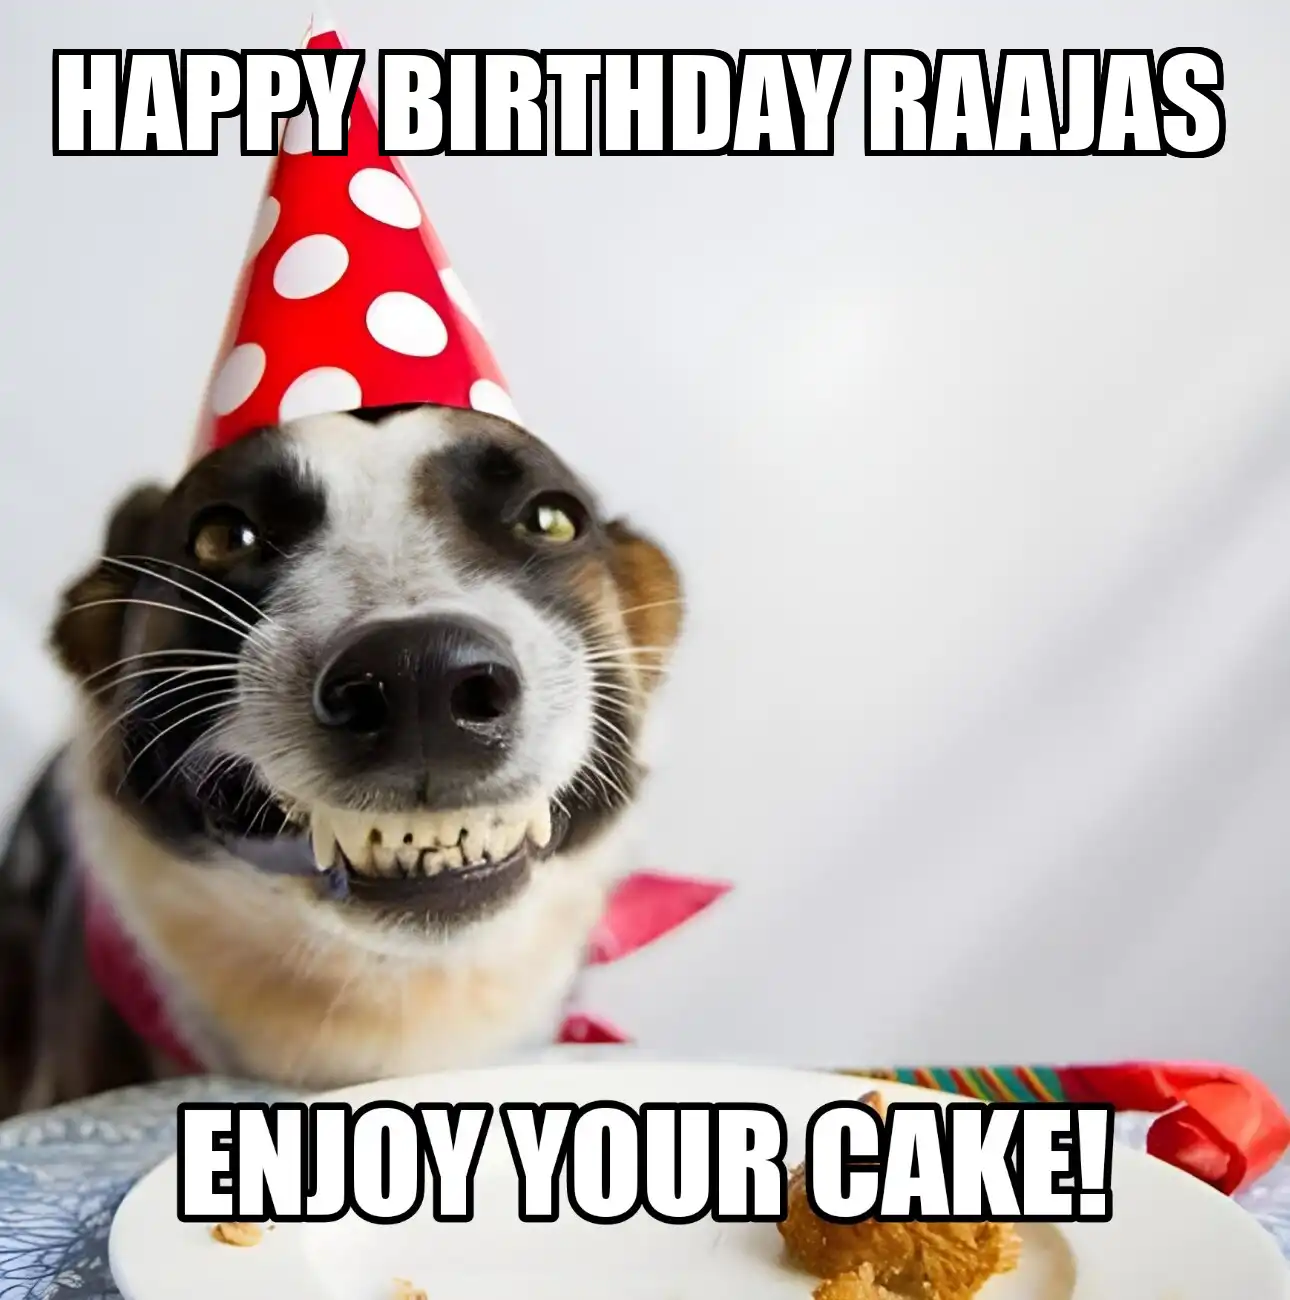 Happy Birthday Raajas Enjoy Your Cake Dog Meme